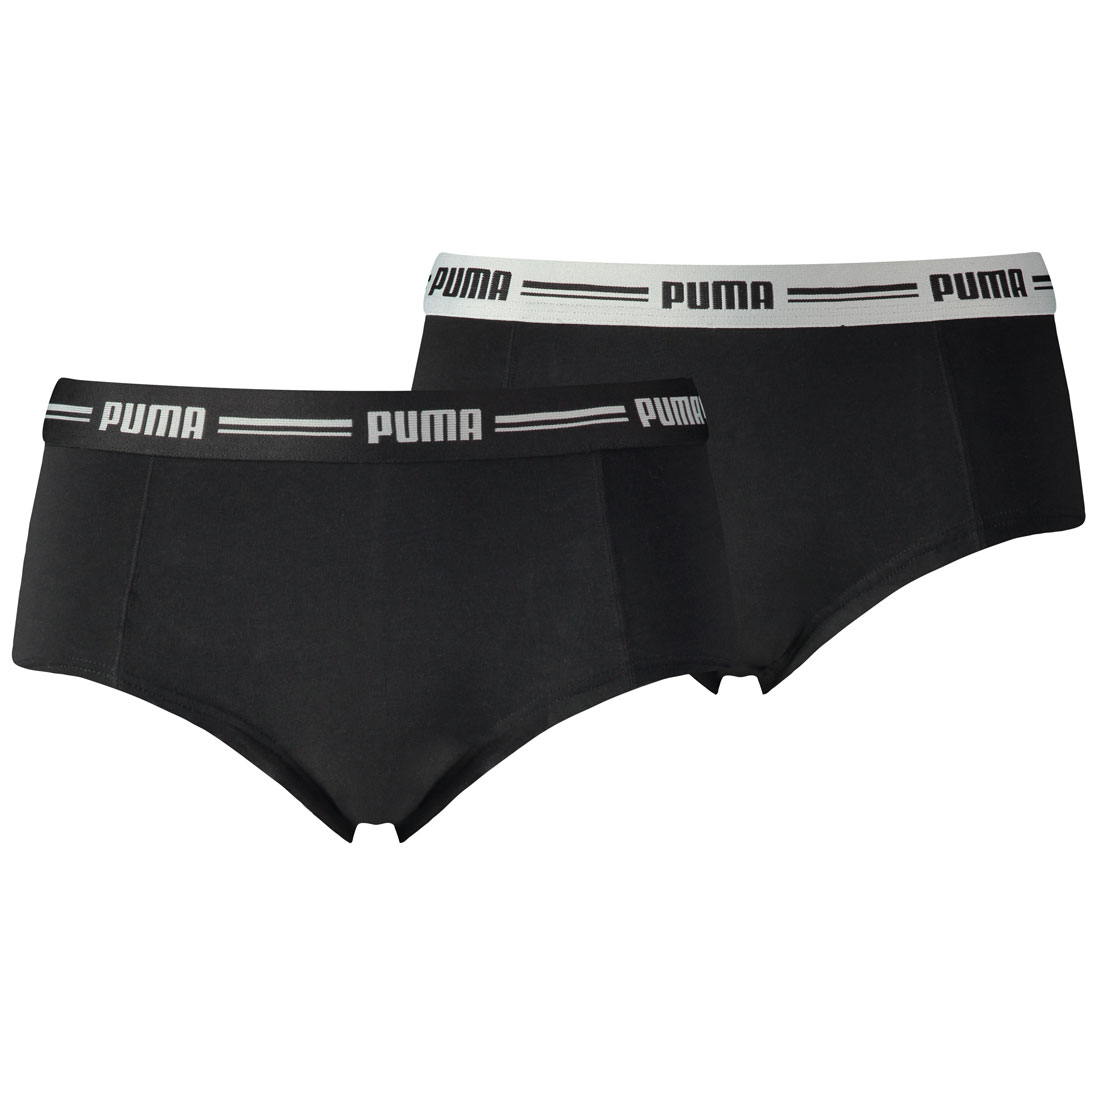 Puma Iconic Mini Short Damen Panty Slip Shorty Unterwäsche Unterhose